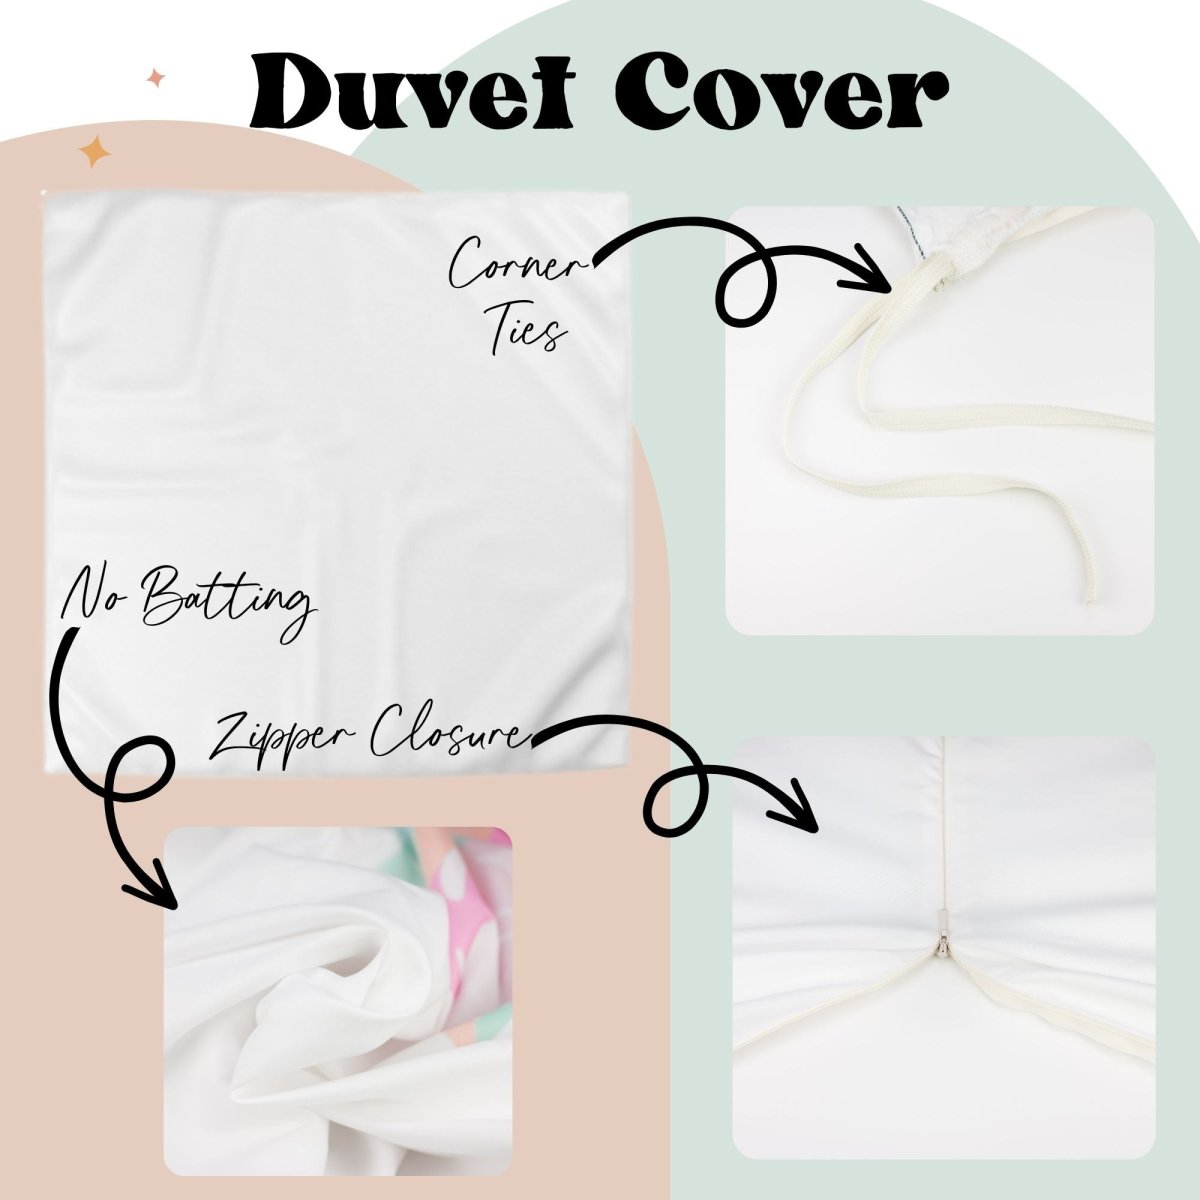 Tropical Flamingo Teal Kids Bedding Set (Comforter or Duvet Cover) - gender_girl, text, Theme_Tropical